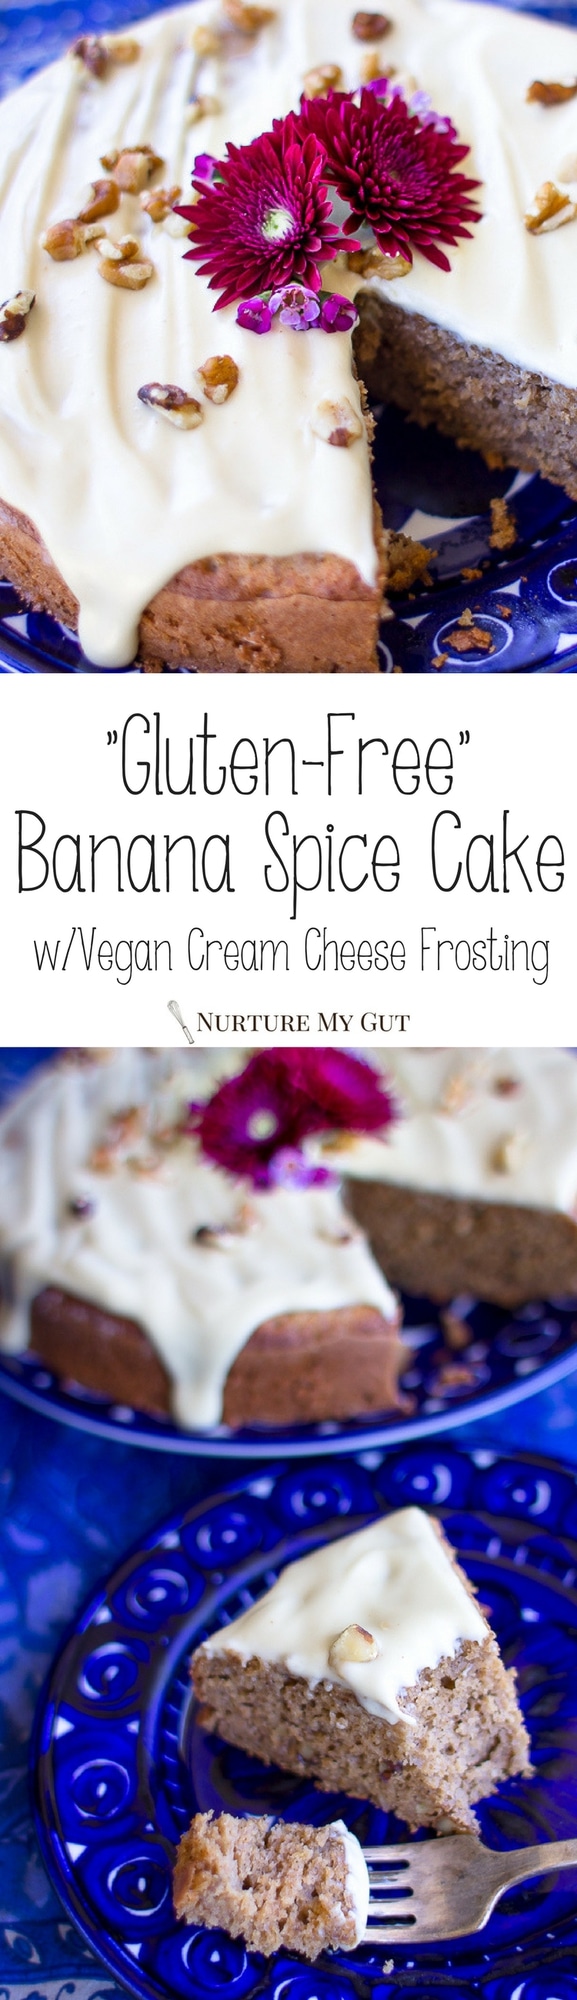 Gluten Free Banana Spice Cake w/Vegan Cream Cheese Frosting